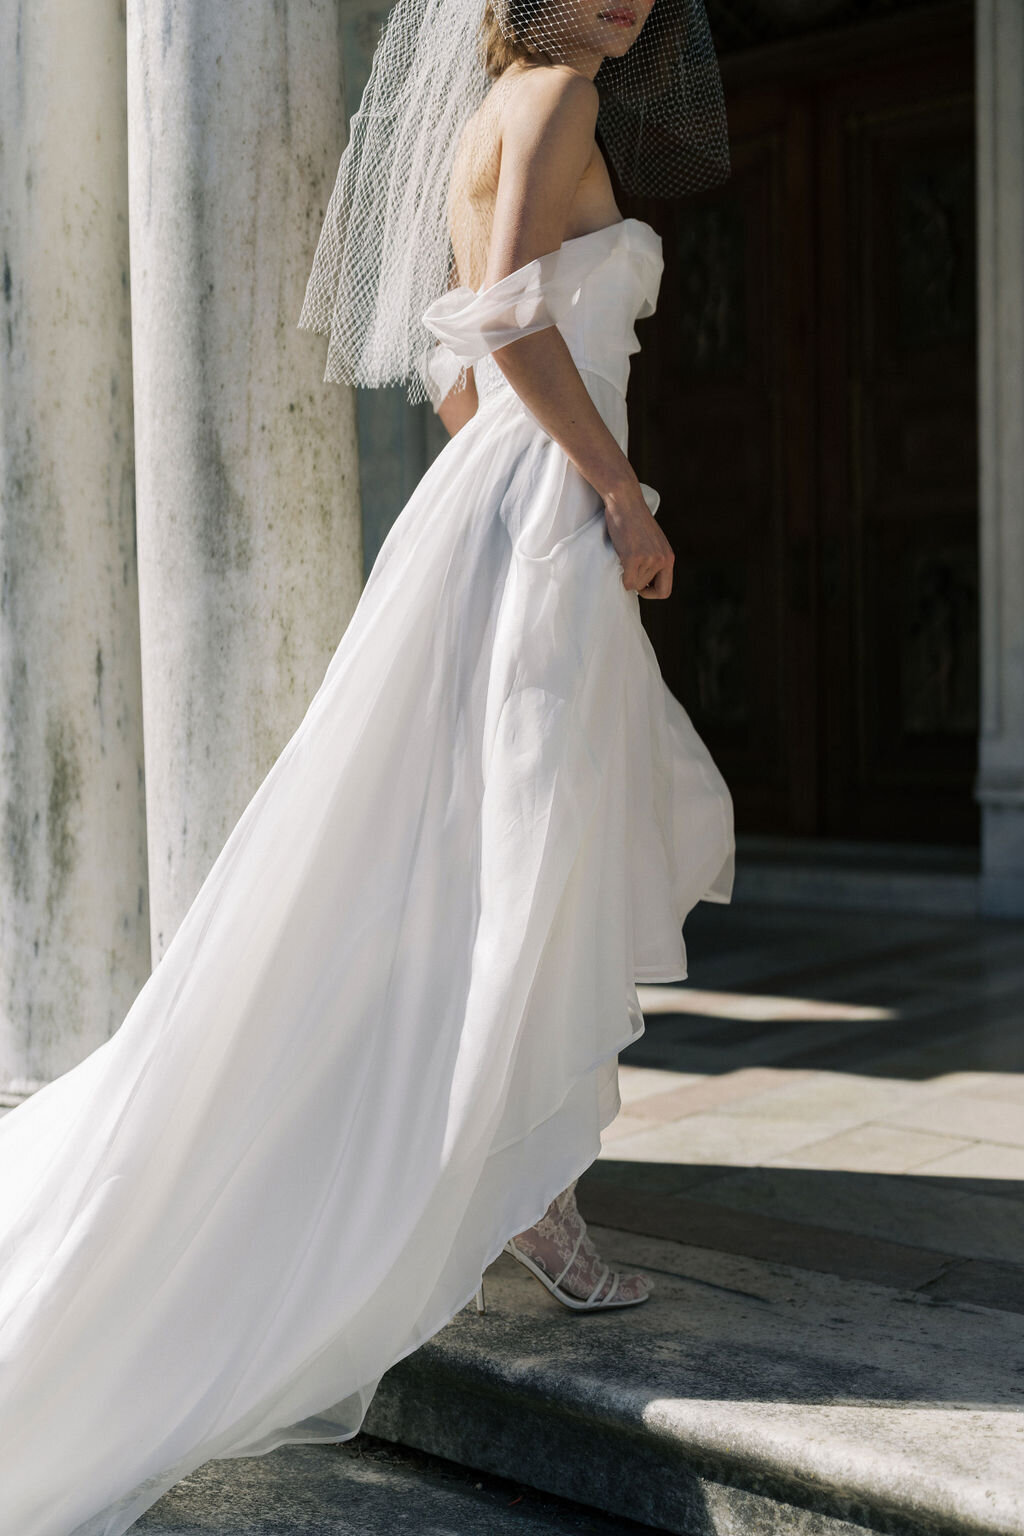 bride in wedding dress lifting skirt